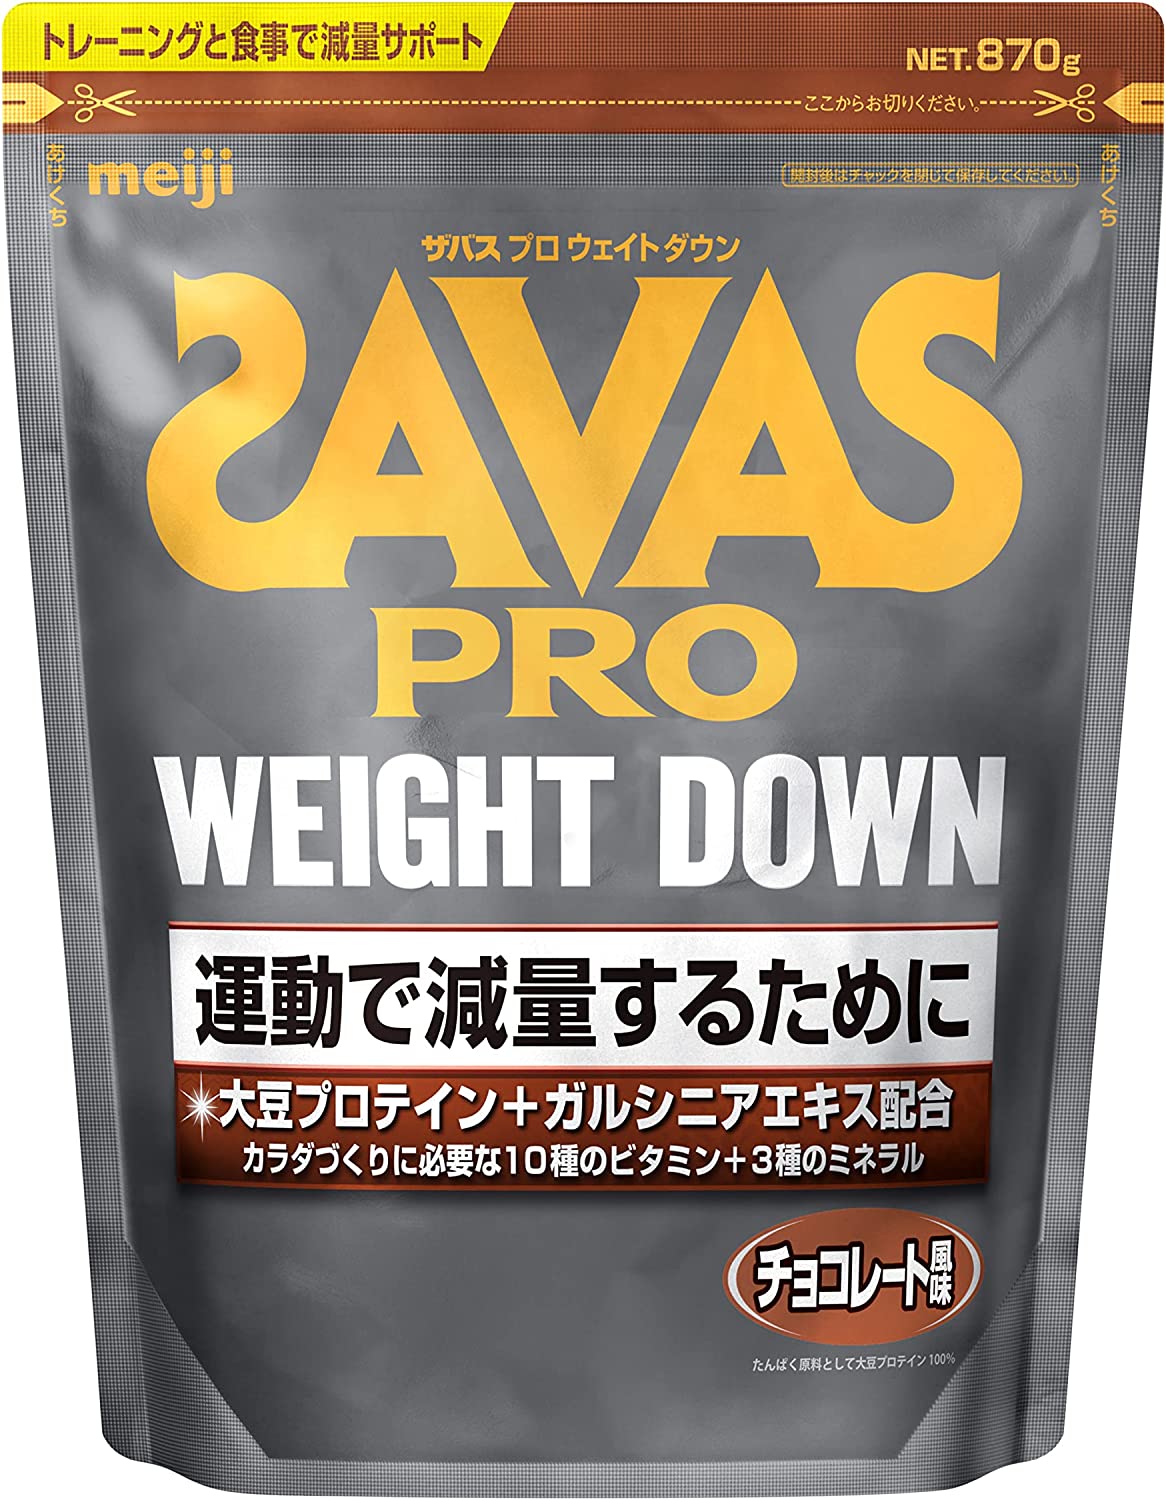 Meiji, Savas Weight Down-protein complex to reduce weight with chocolate taste, 50 servings.